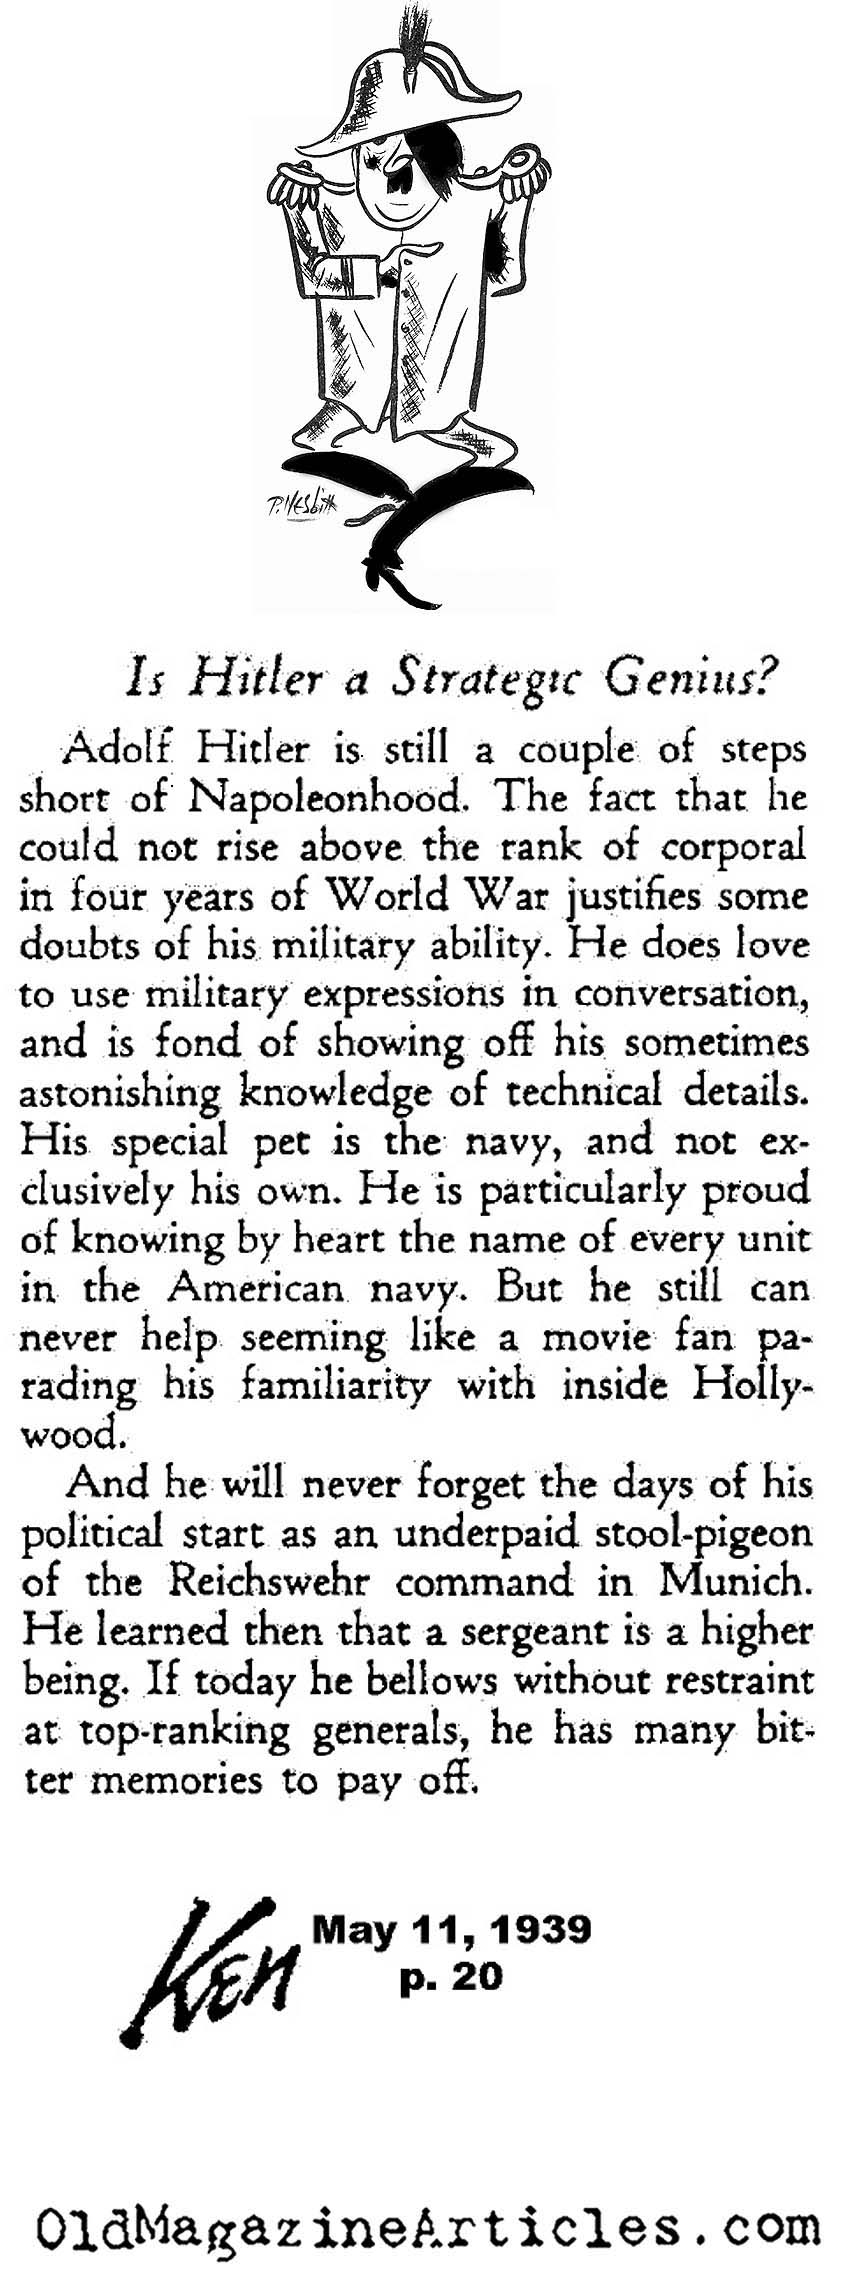 A Military Genius? (Ken Magazine, 1939)